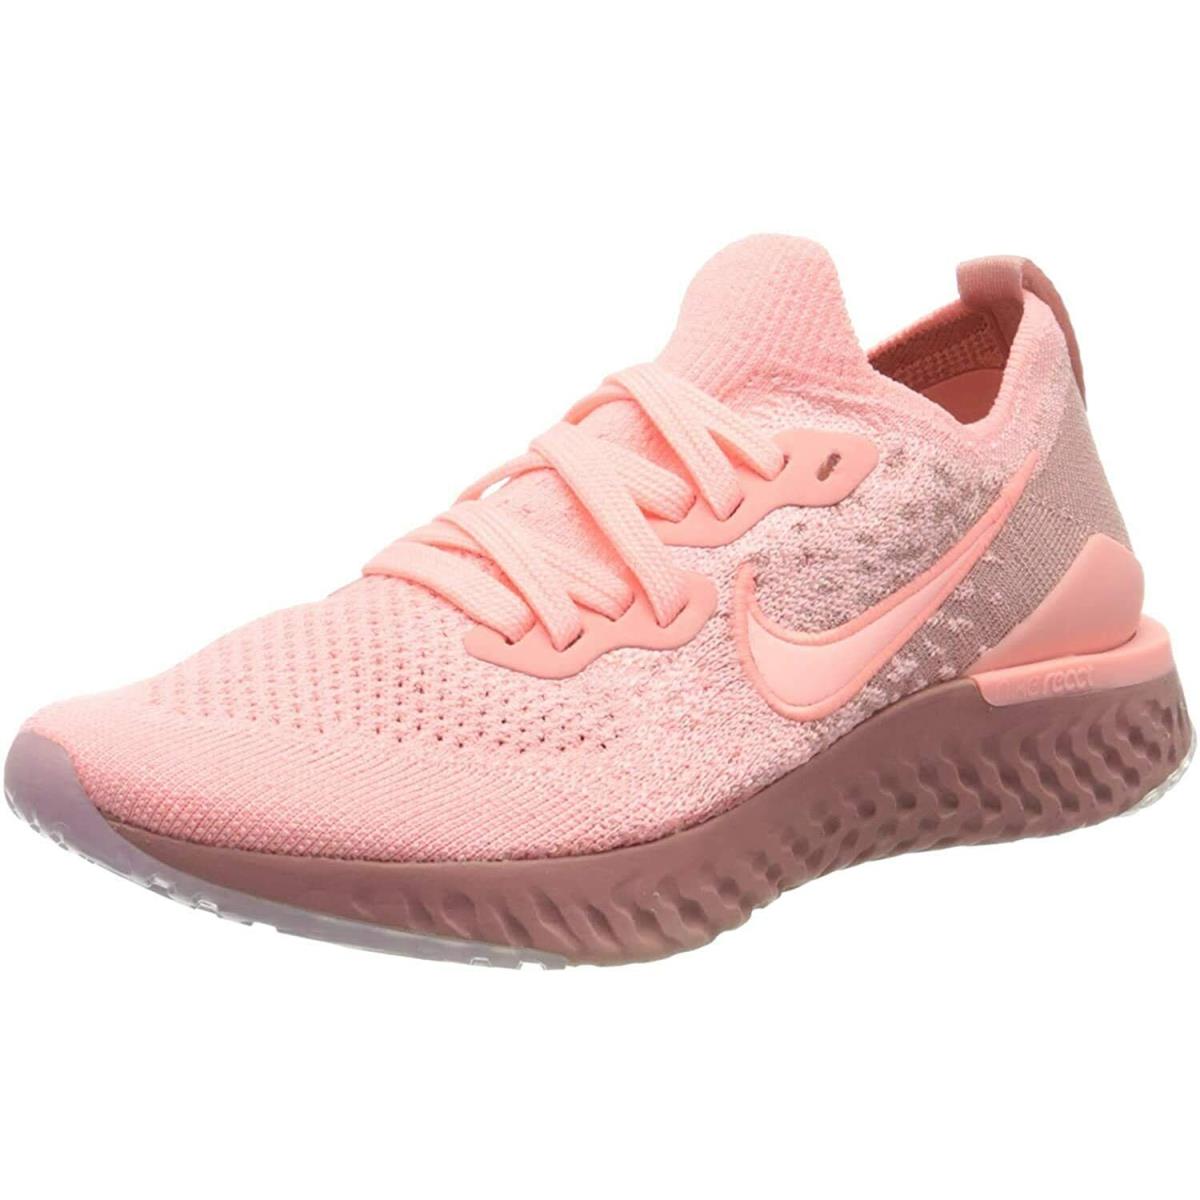 Nike Epic React Flyknit 2 Pink Women s Shoes Sz 11.5 Running Athletic BQ8927 - Pink